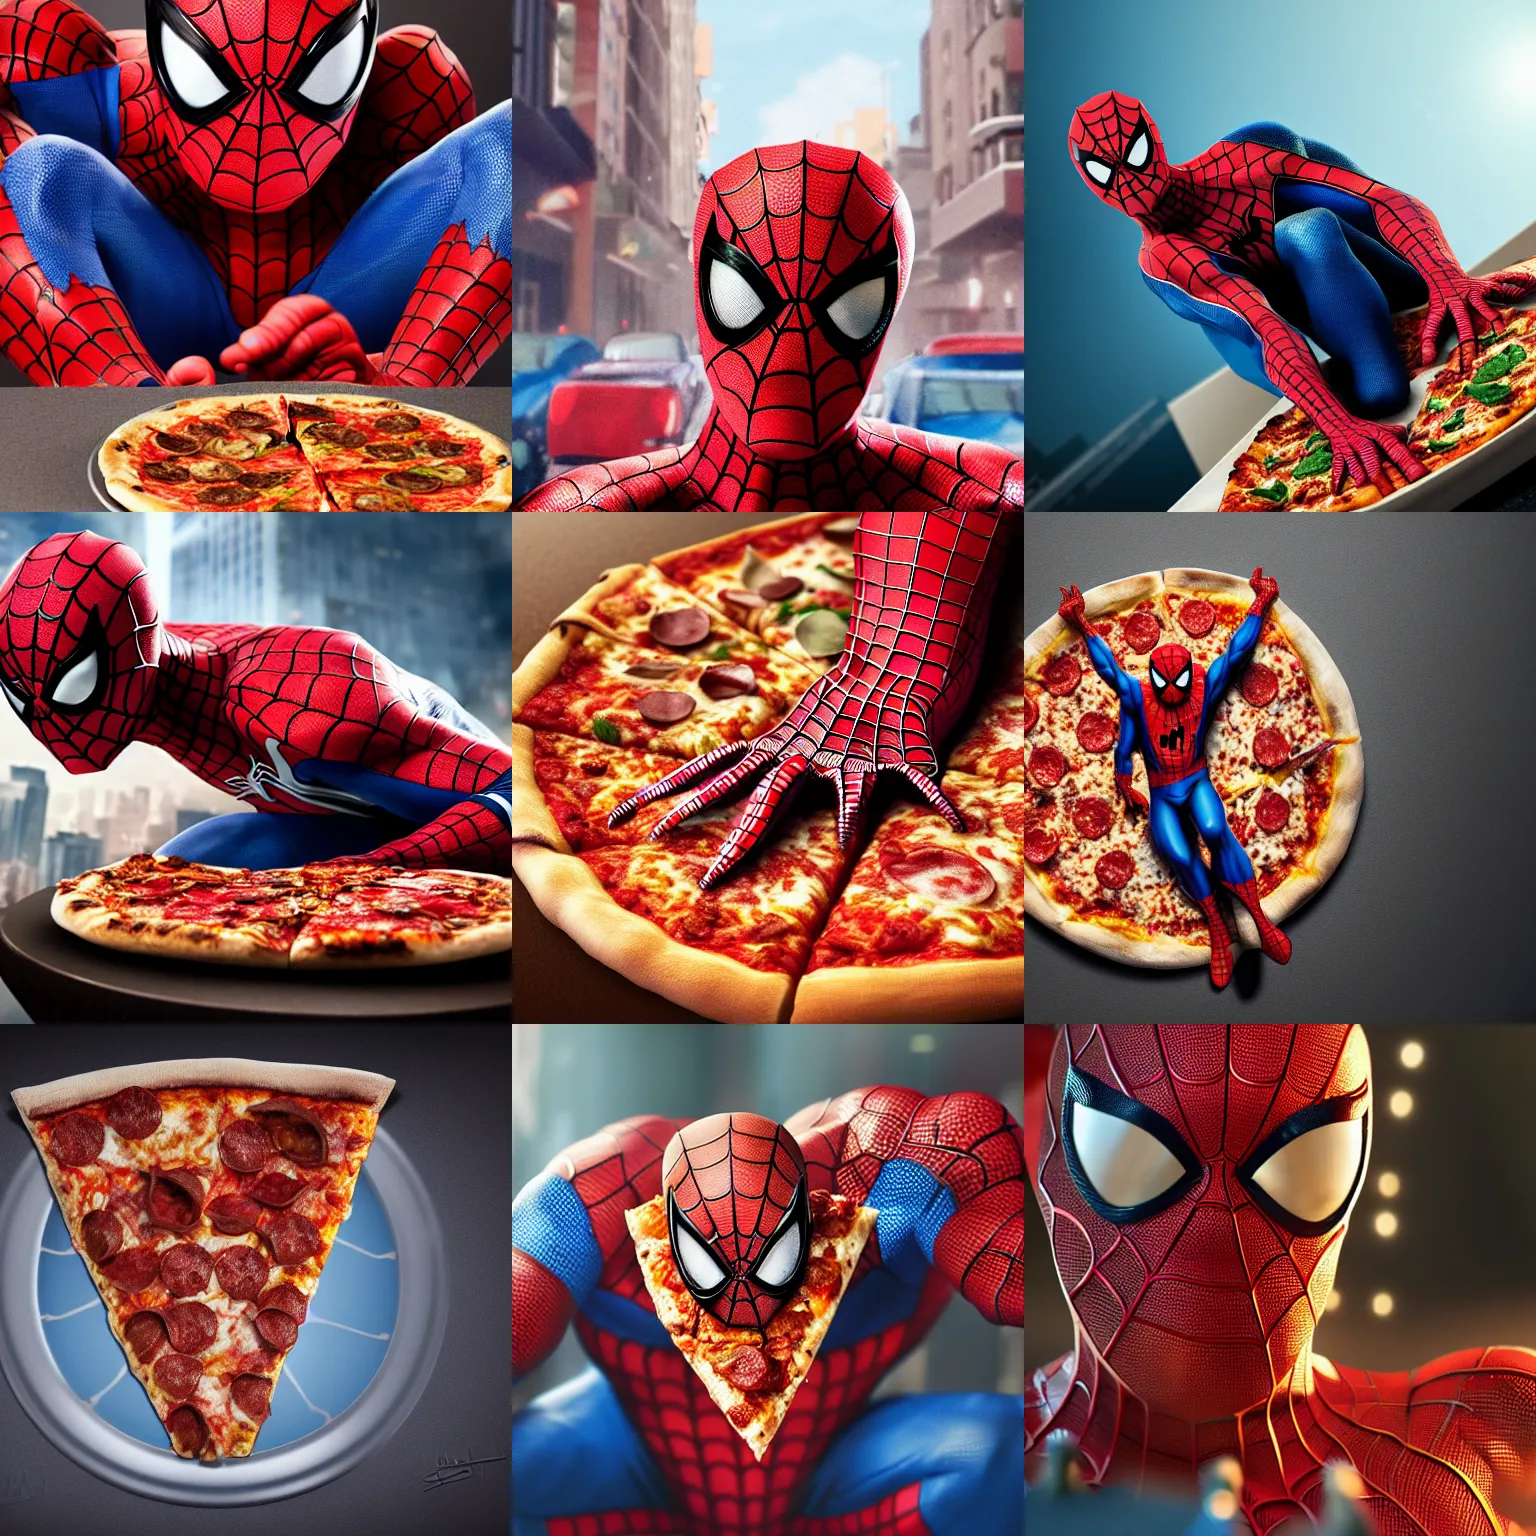 Prompt: spiderman eating pizza nematic, hyper realism, high detail, octane render, 8k, depth of field, bokeh, vibrant